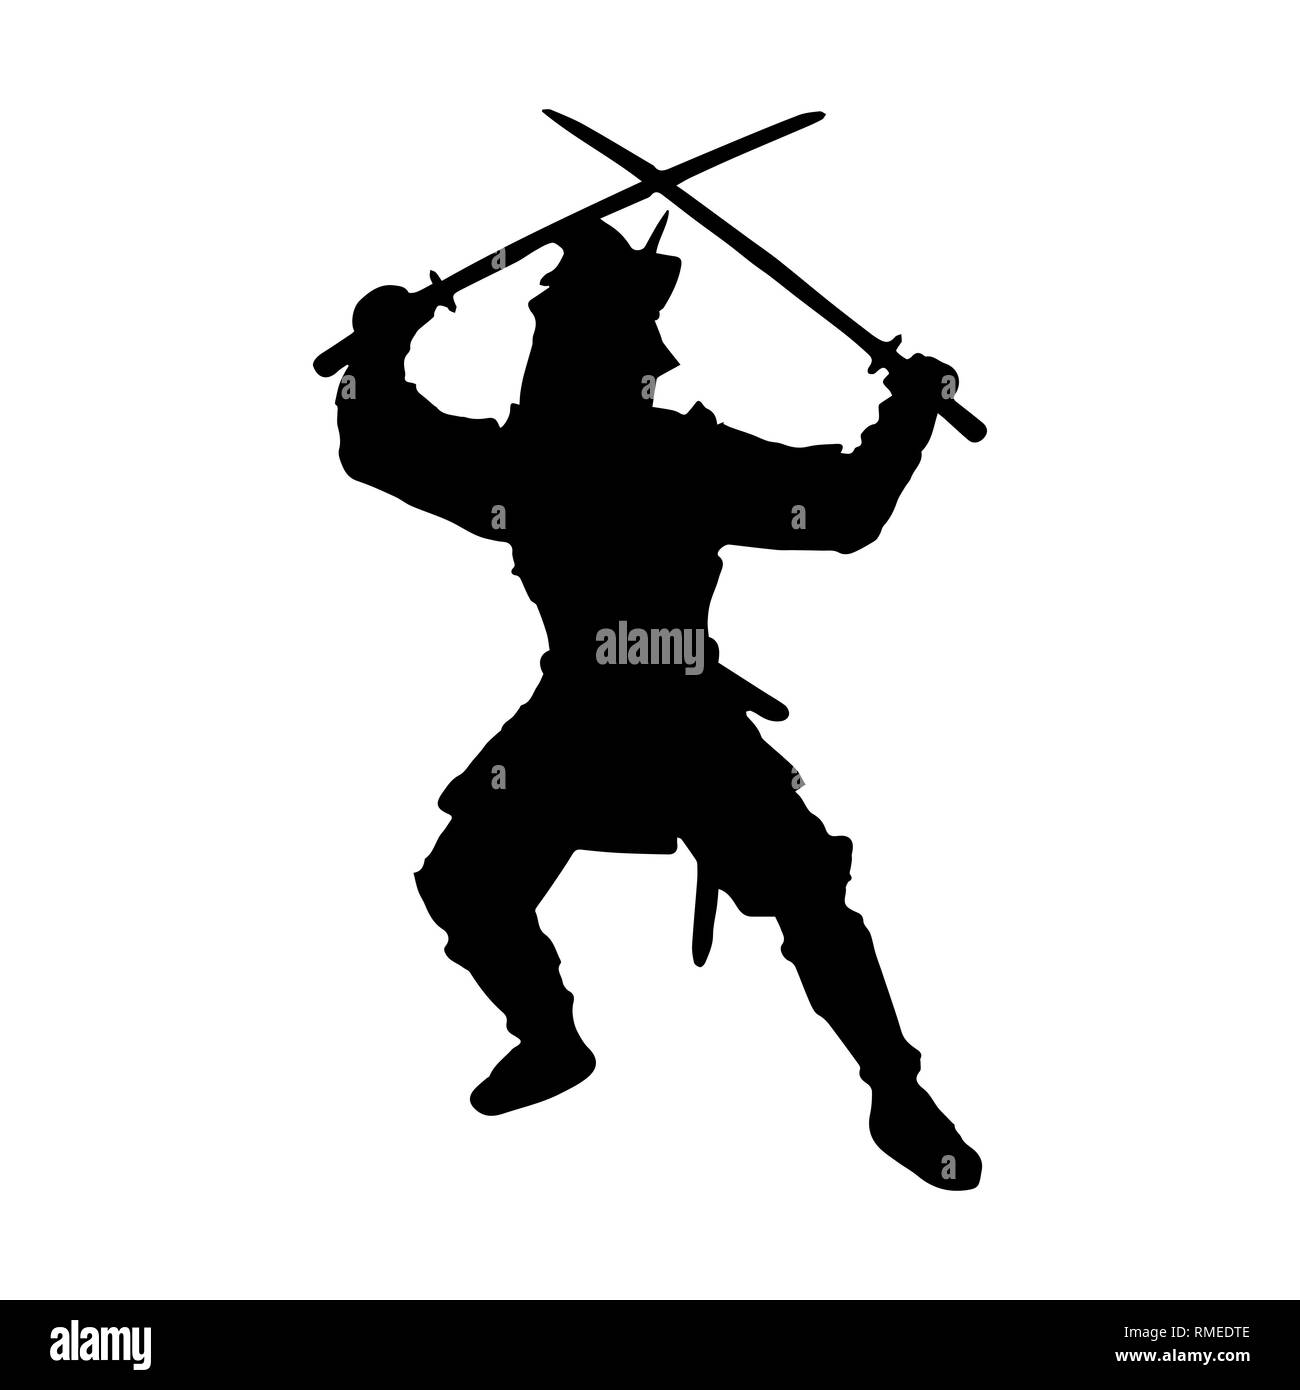 illustration vector graphic of Samurai training at night on a full